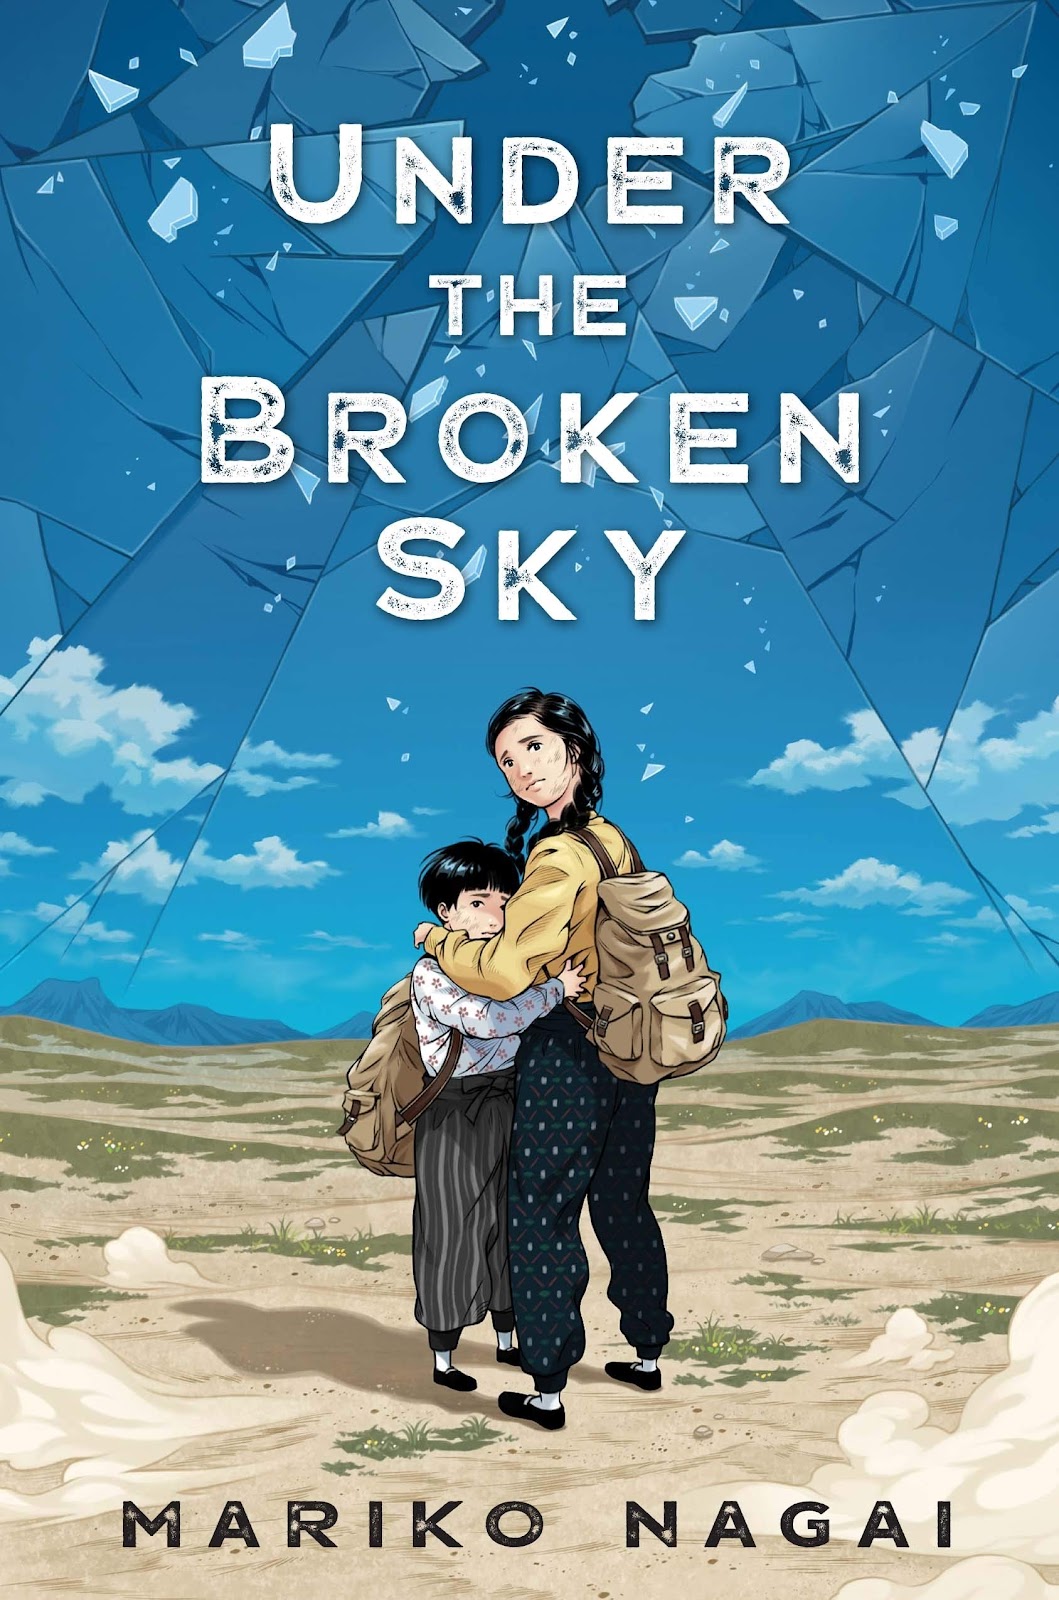 Amazon.com: Under the Broken Sky: 9781250159212: Nagai, Mariko: Books